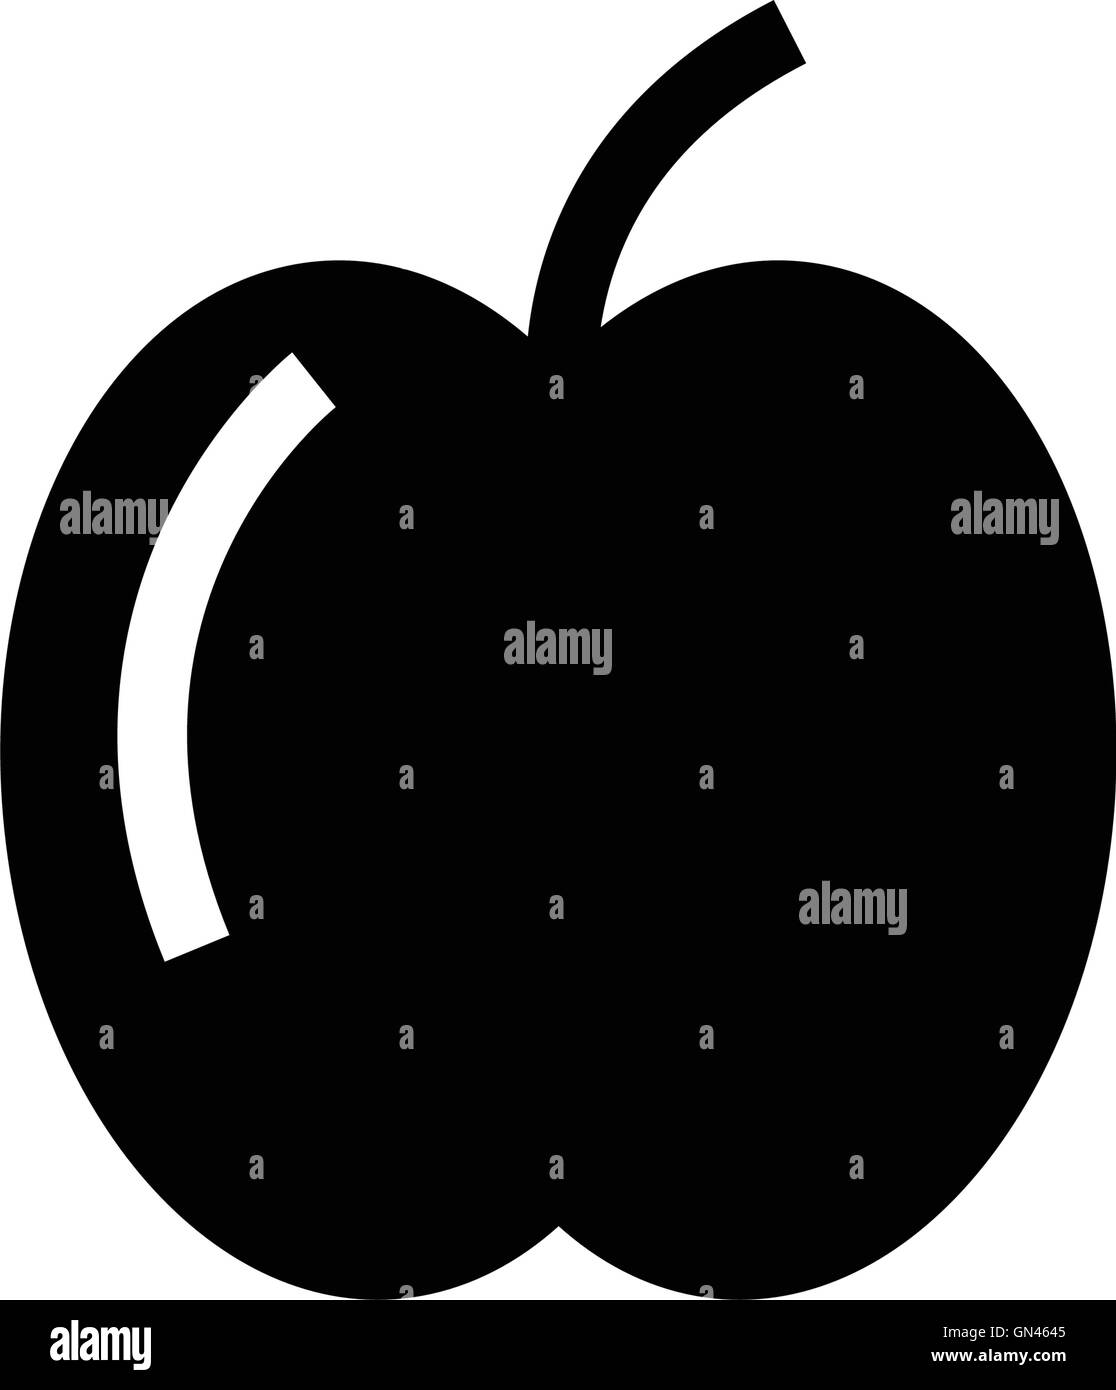 apple - vector icon Stock Vector